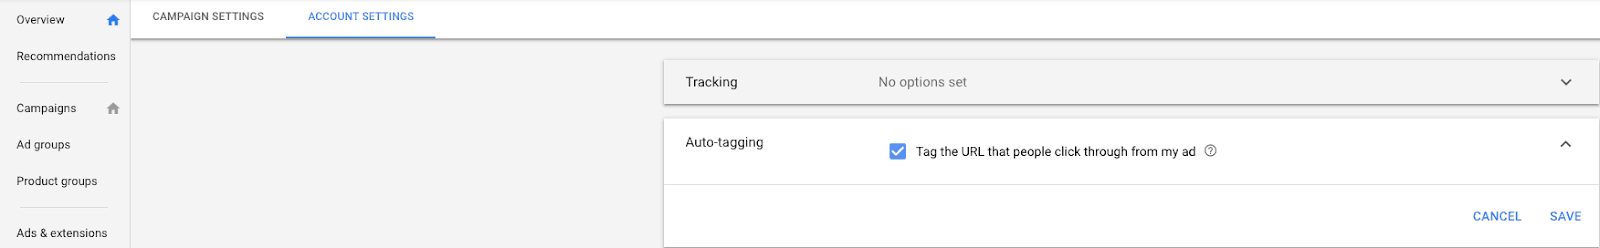 Account settings in Google Analytics